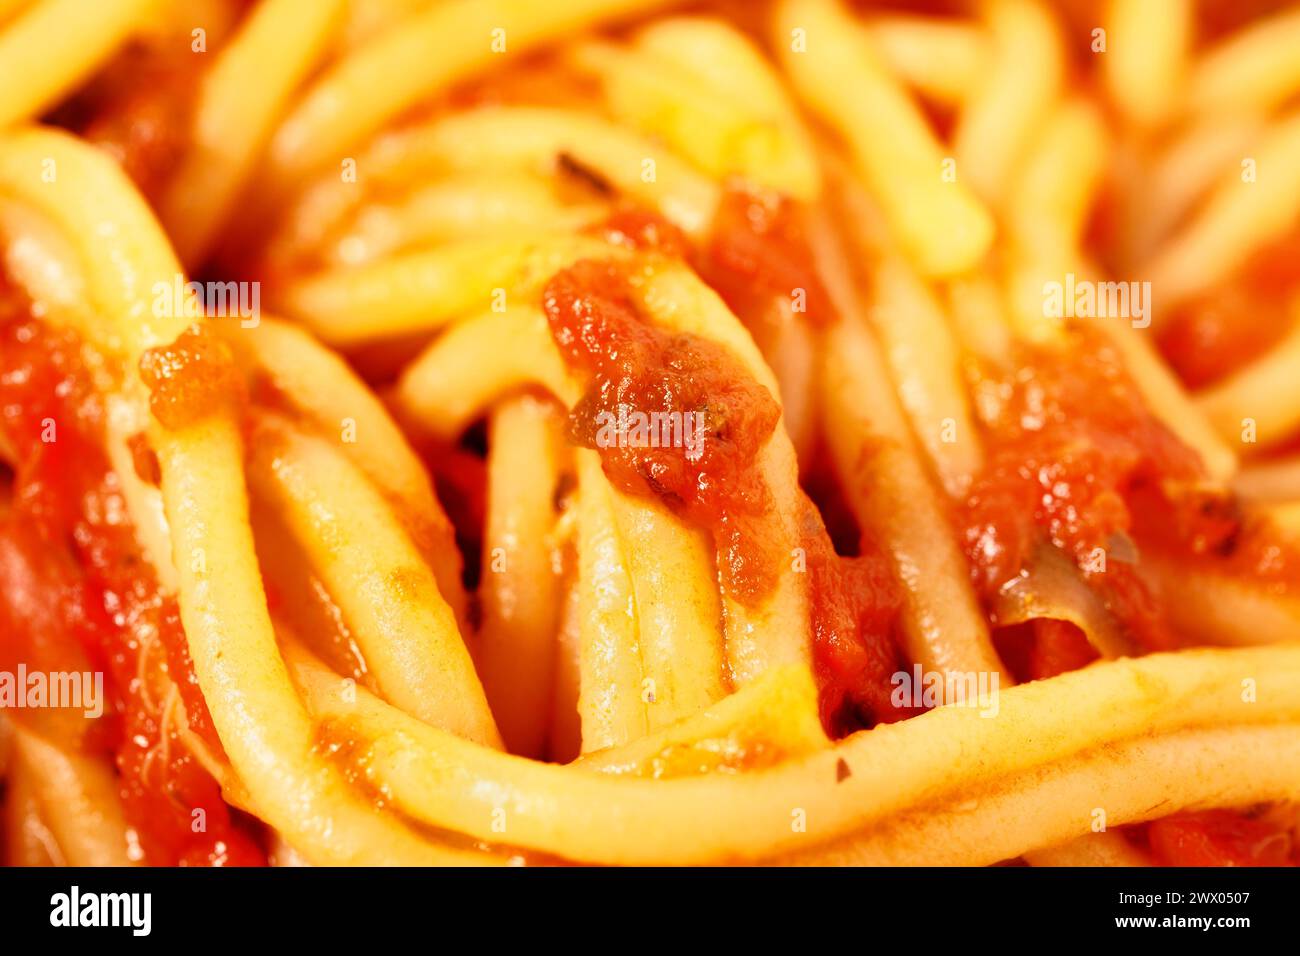 Marco completo de espaguetis de pasta y salsa de tomate, comida italiana tradicional Foto de stock